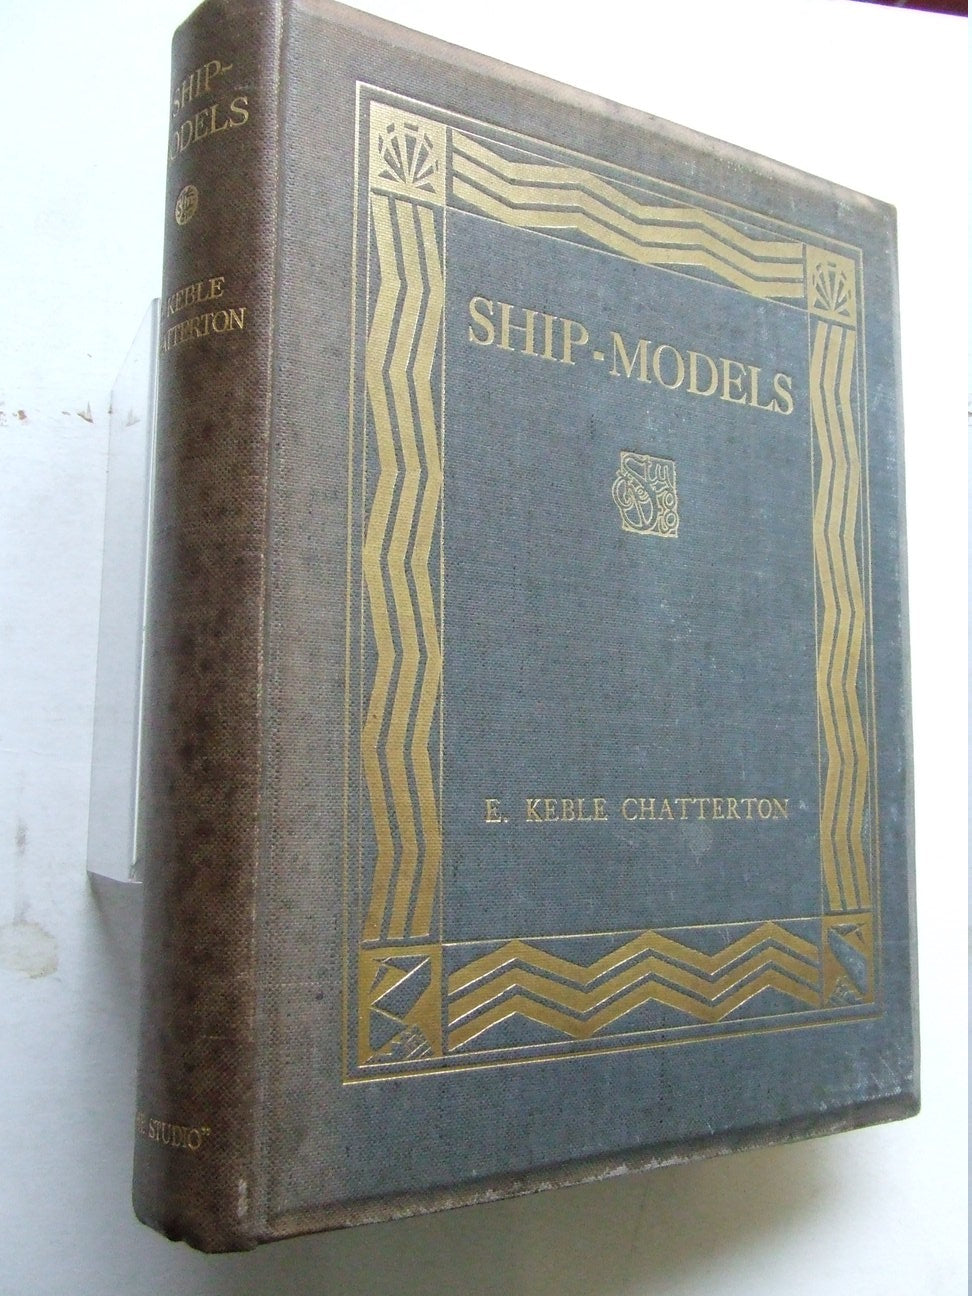 Ship-Models